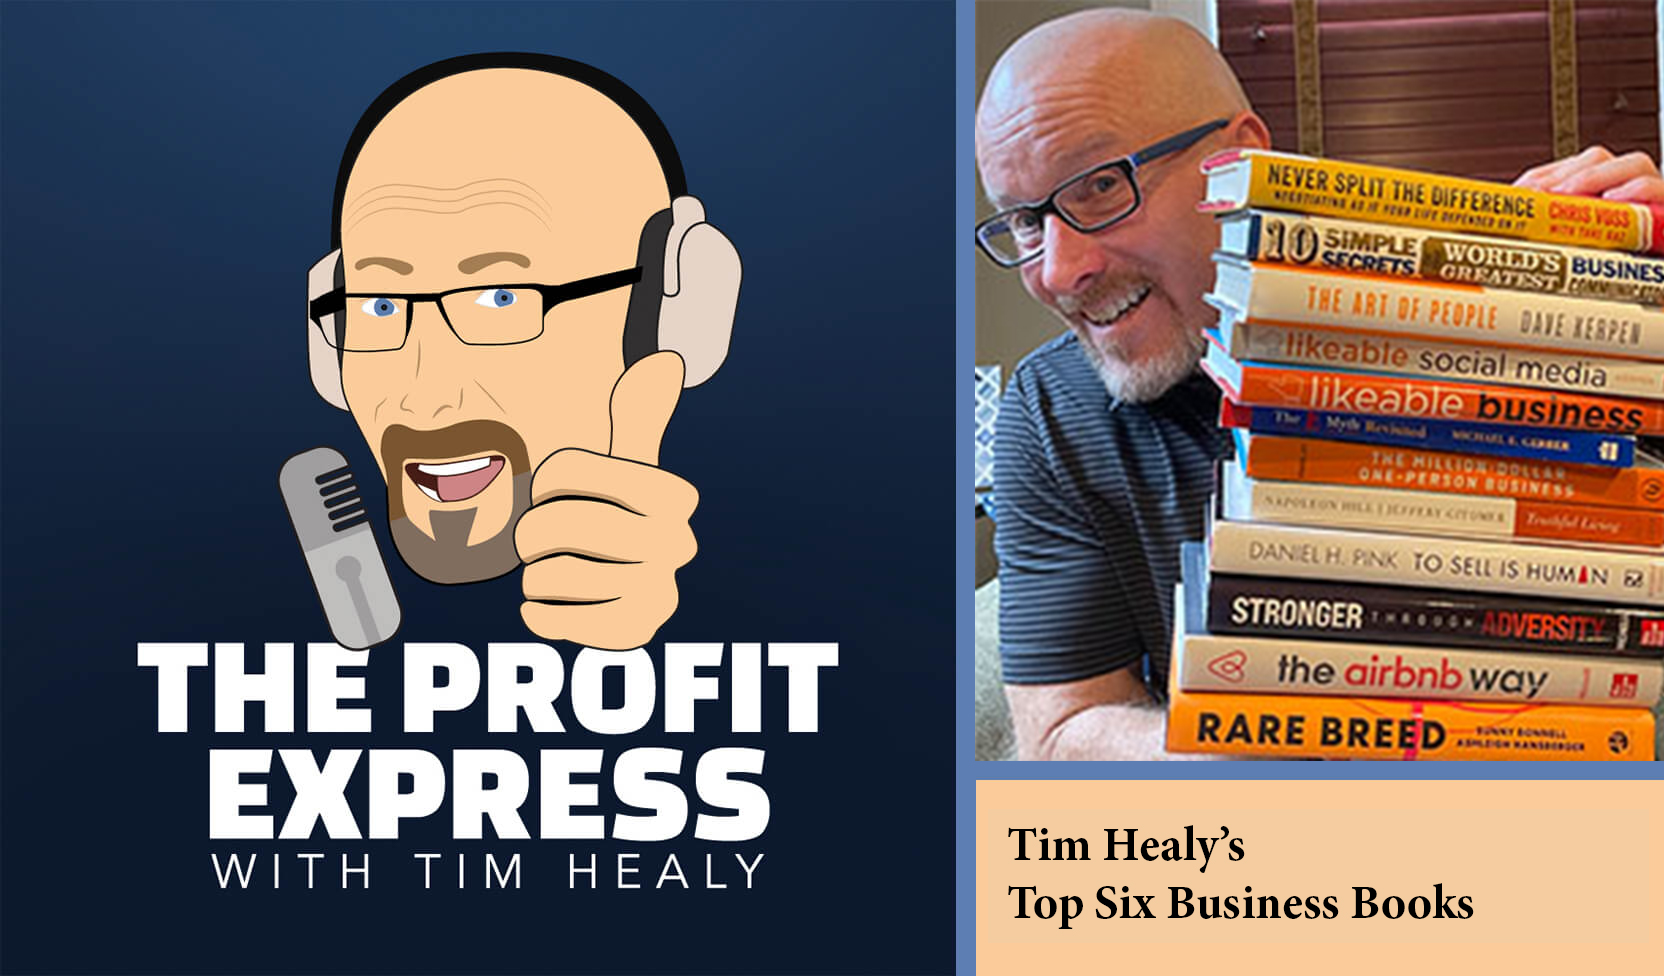 Tim Healy’s Top Six Business Books